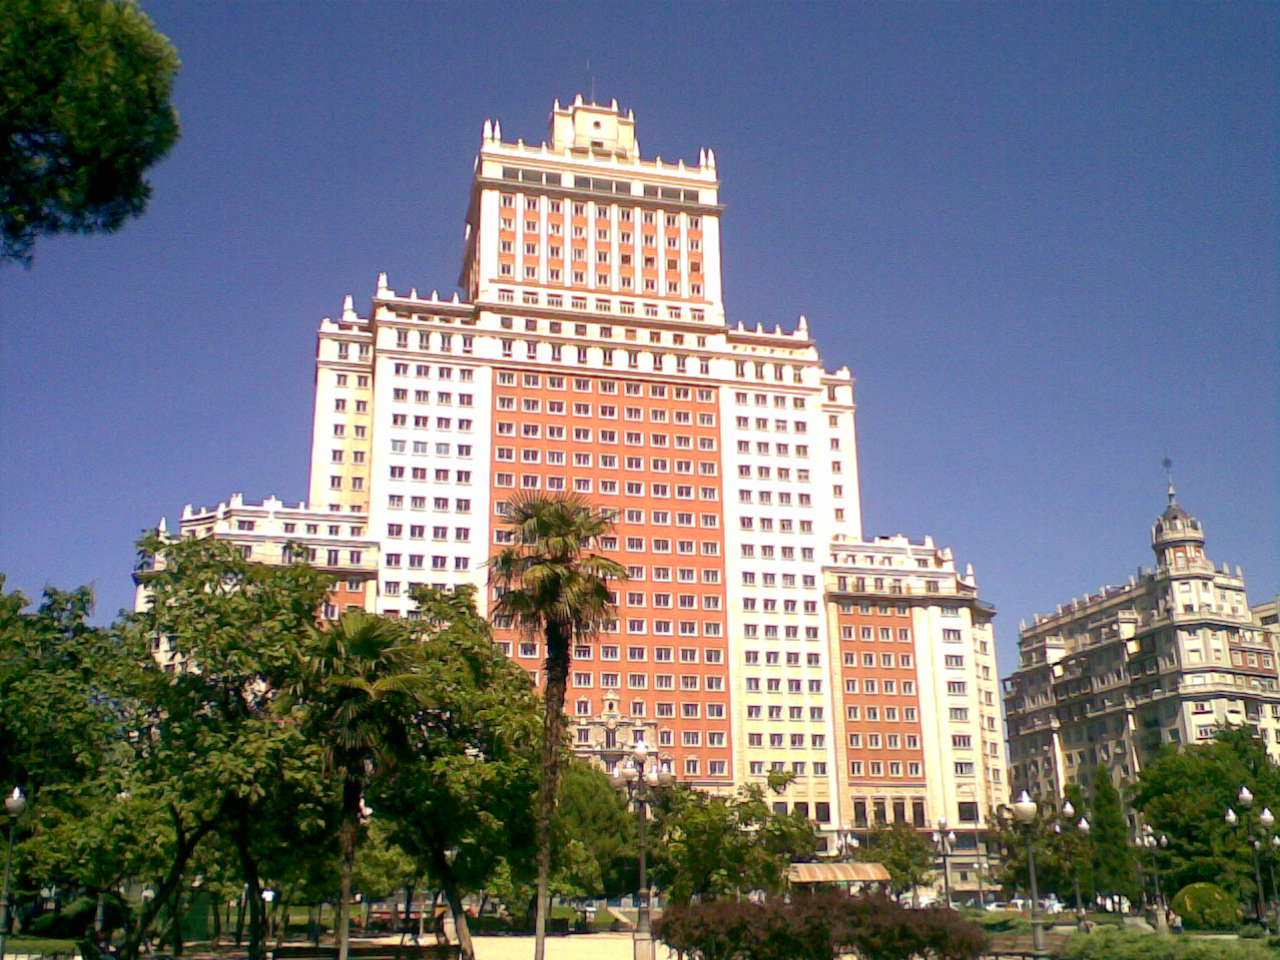 Edificio España en Madrid